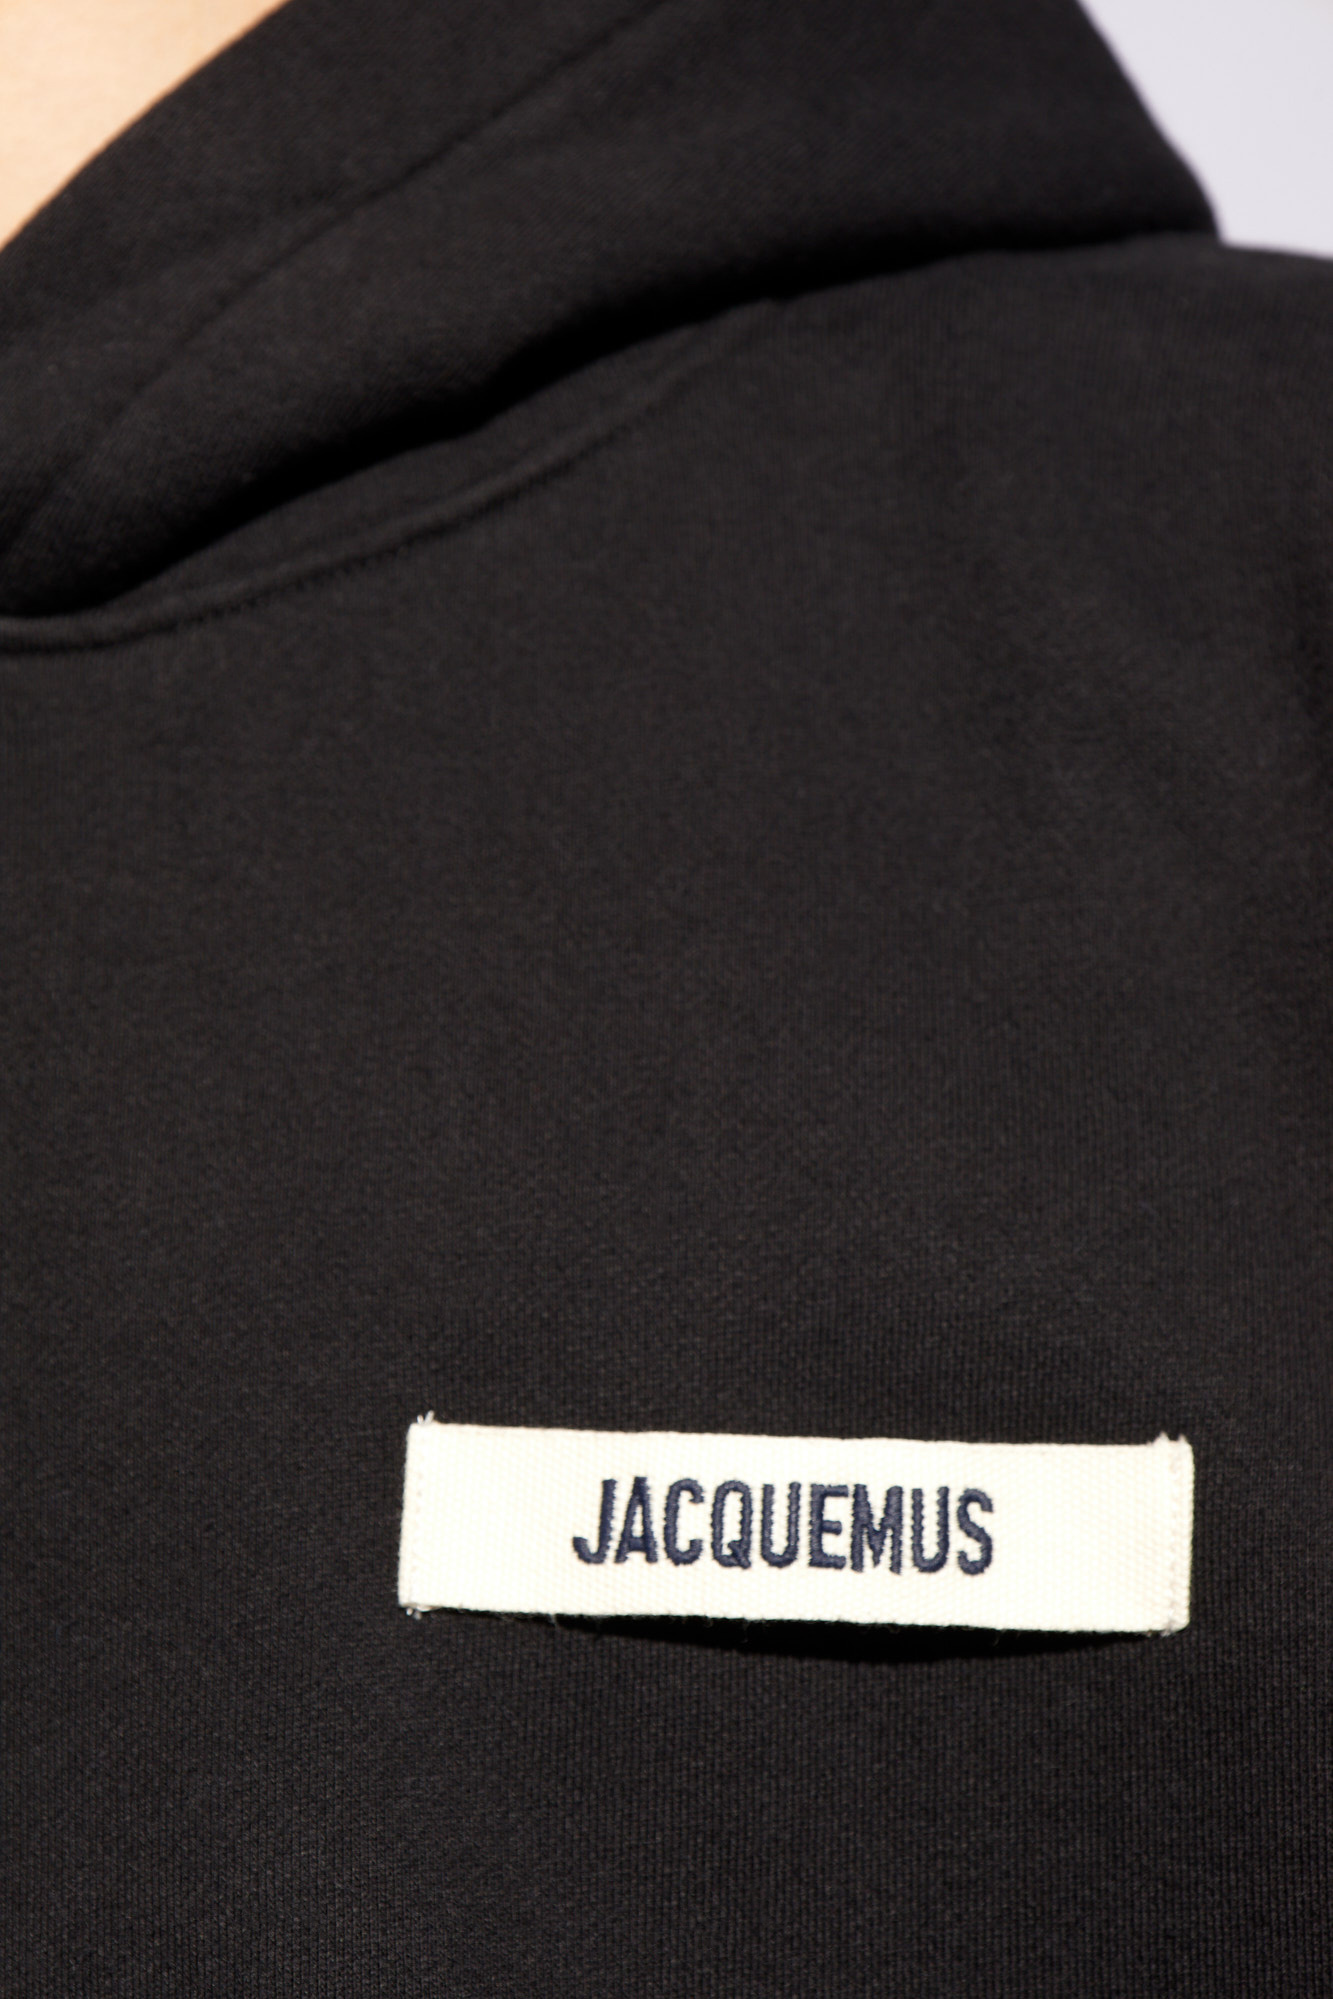 Jacquemus Tommy Hilfiger tricolour polo shirt